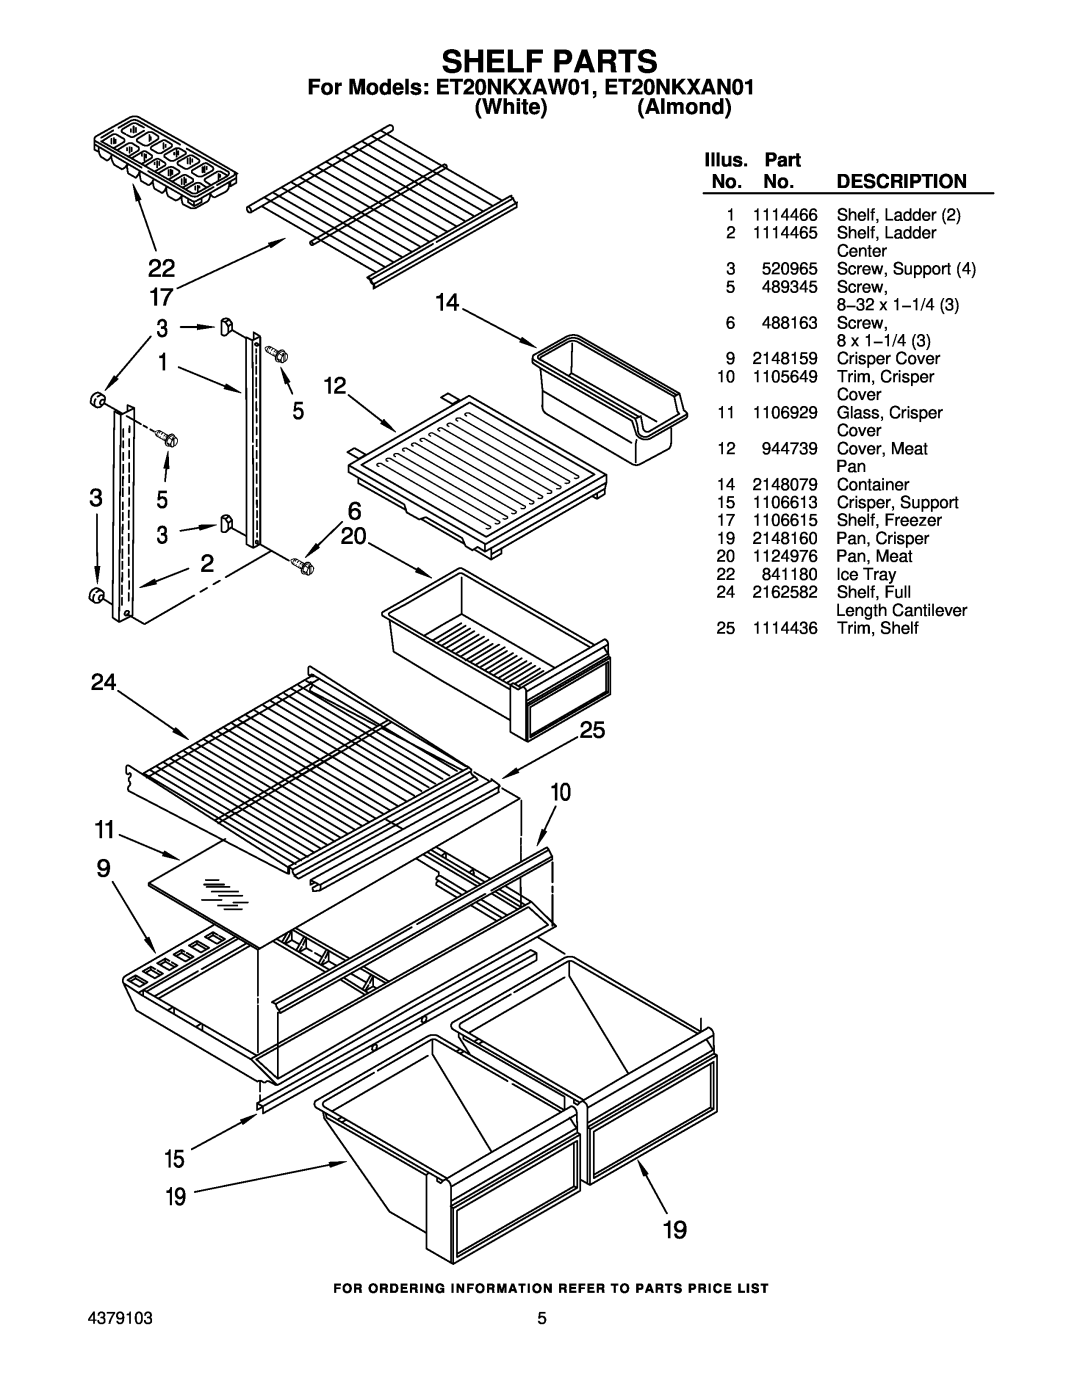 Whirlpool manual Shelf Parts, For Models ET20NKXAW01, ET20NKXAN01 White Almond, Illus, Description 